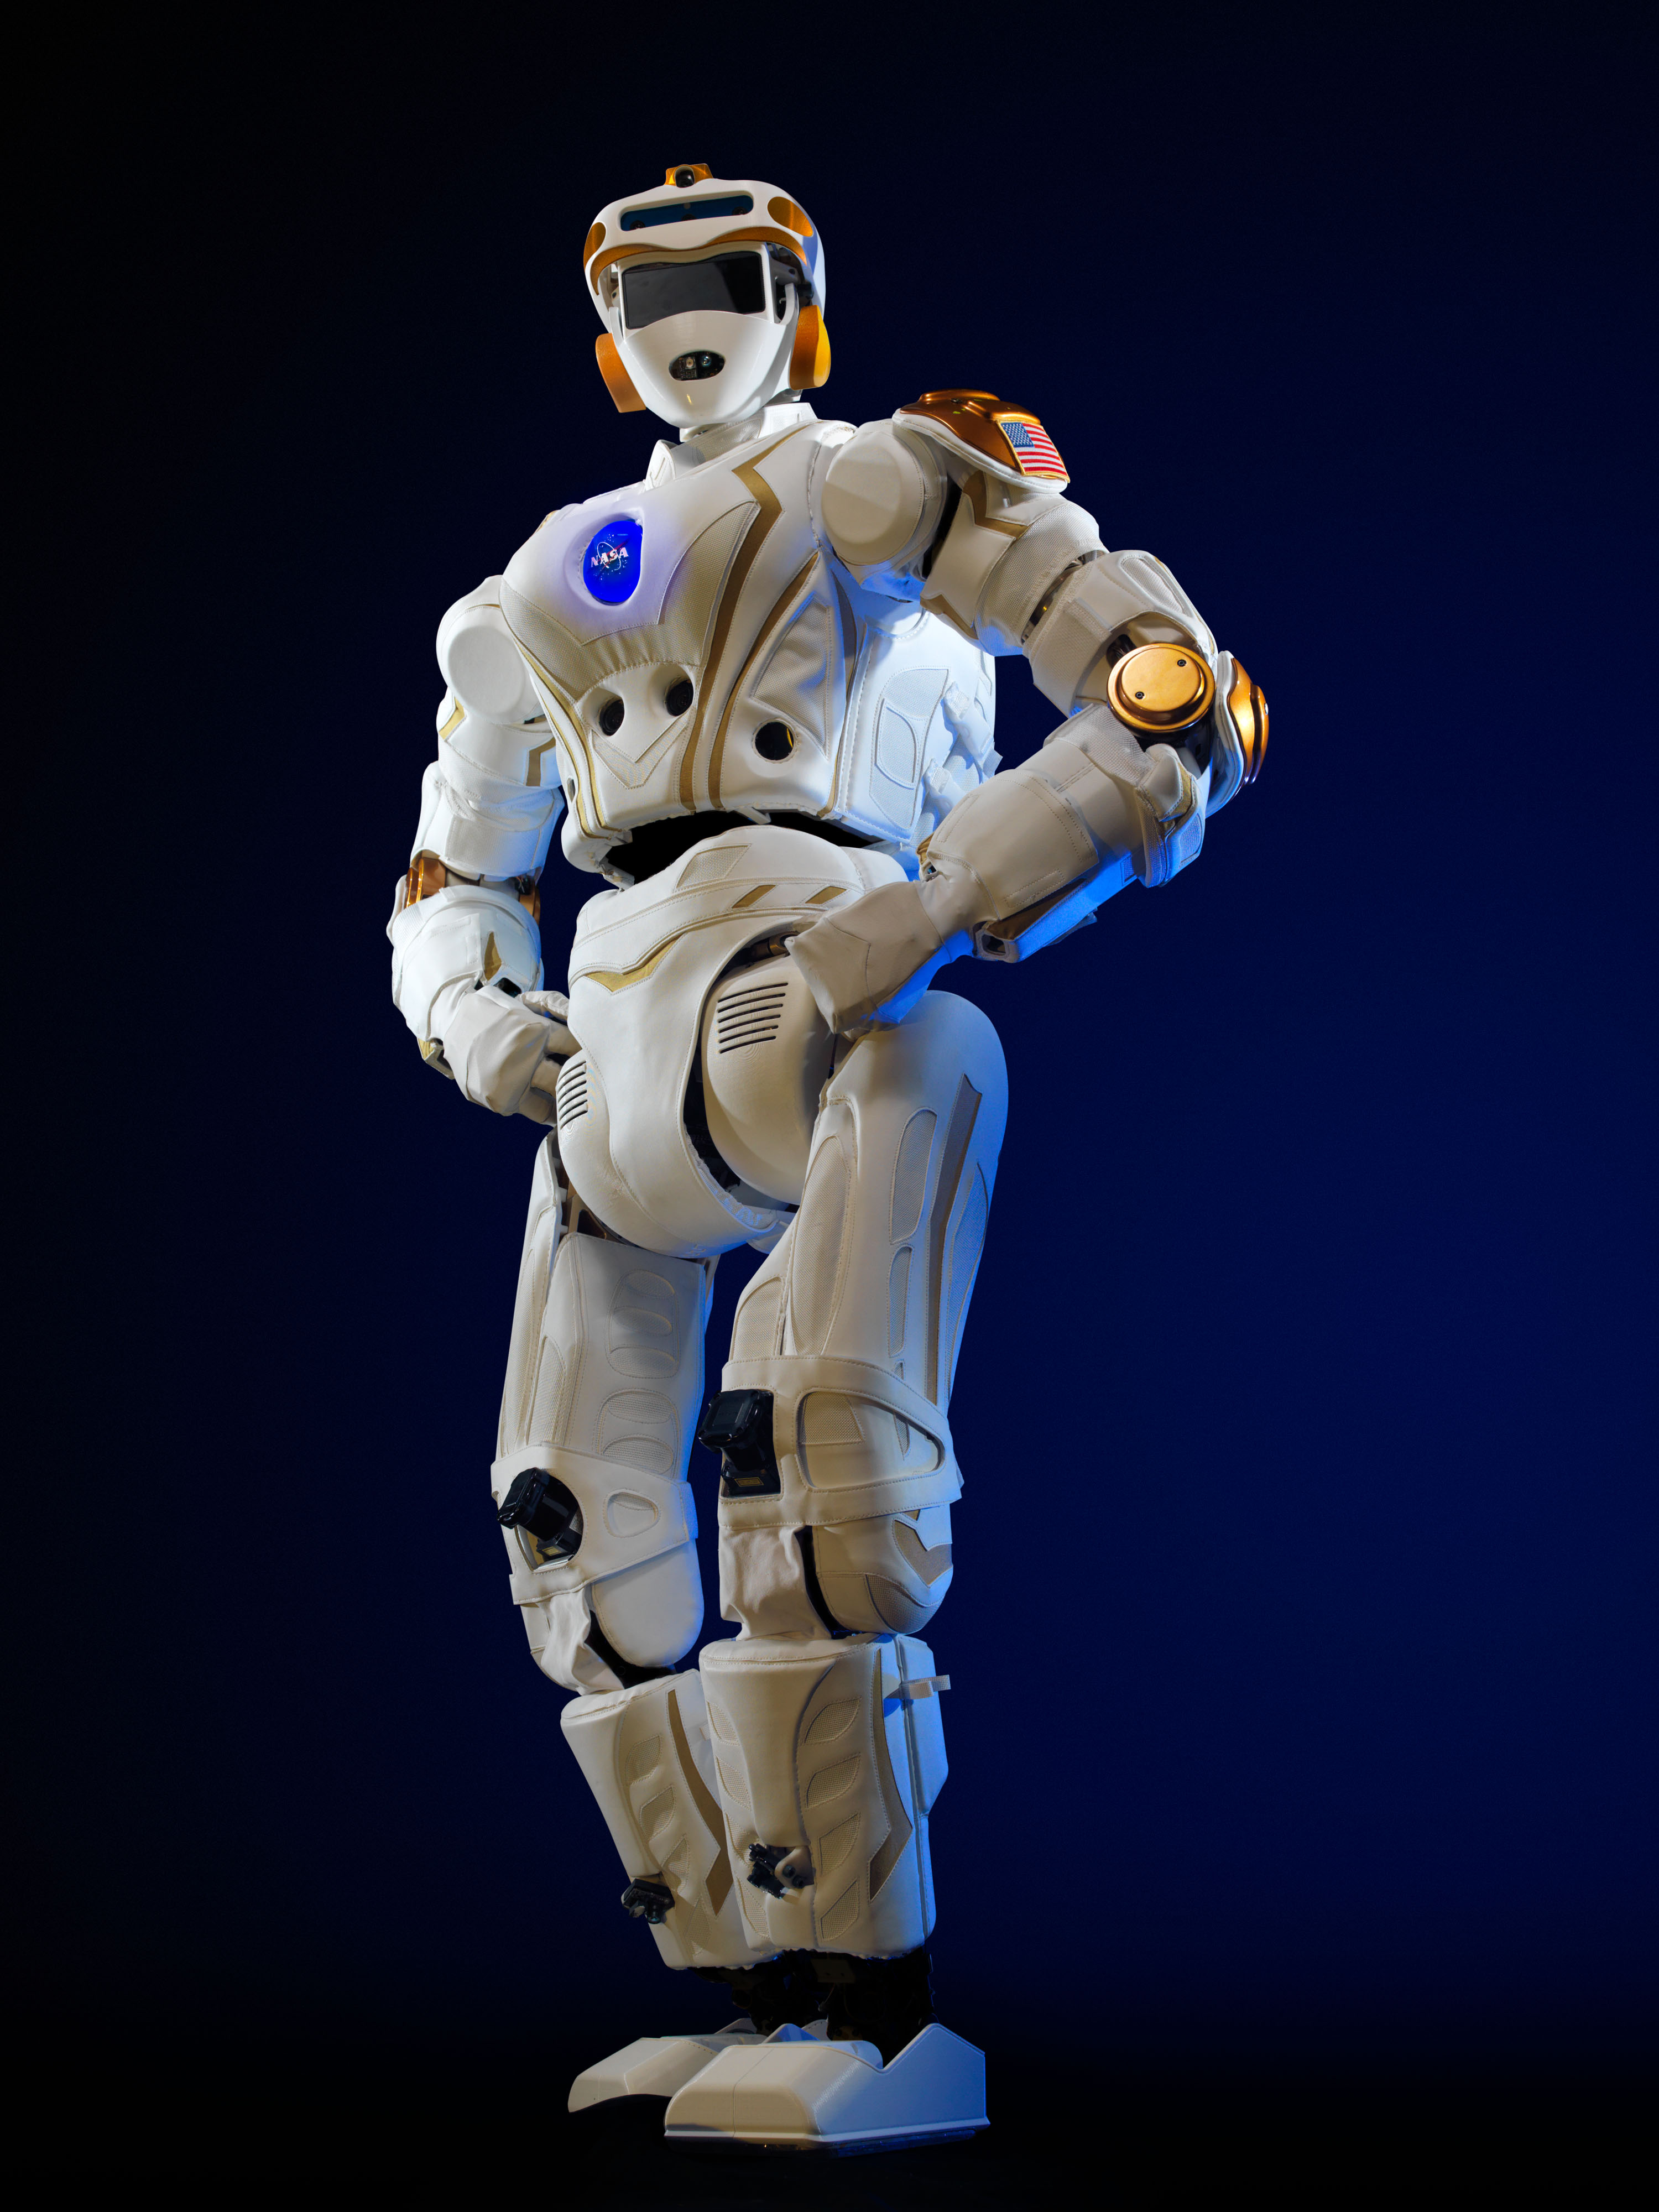 Valkyrie-robot-3.jpg